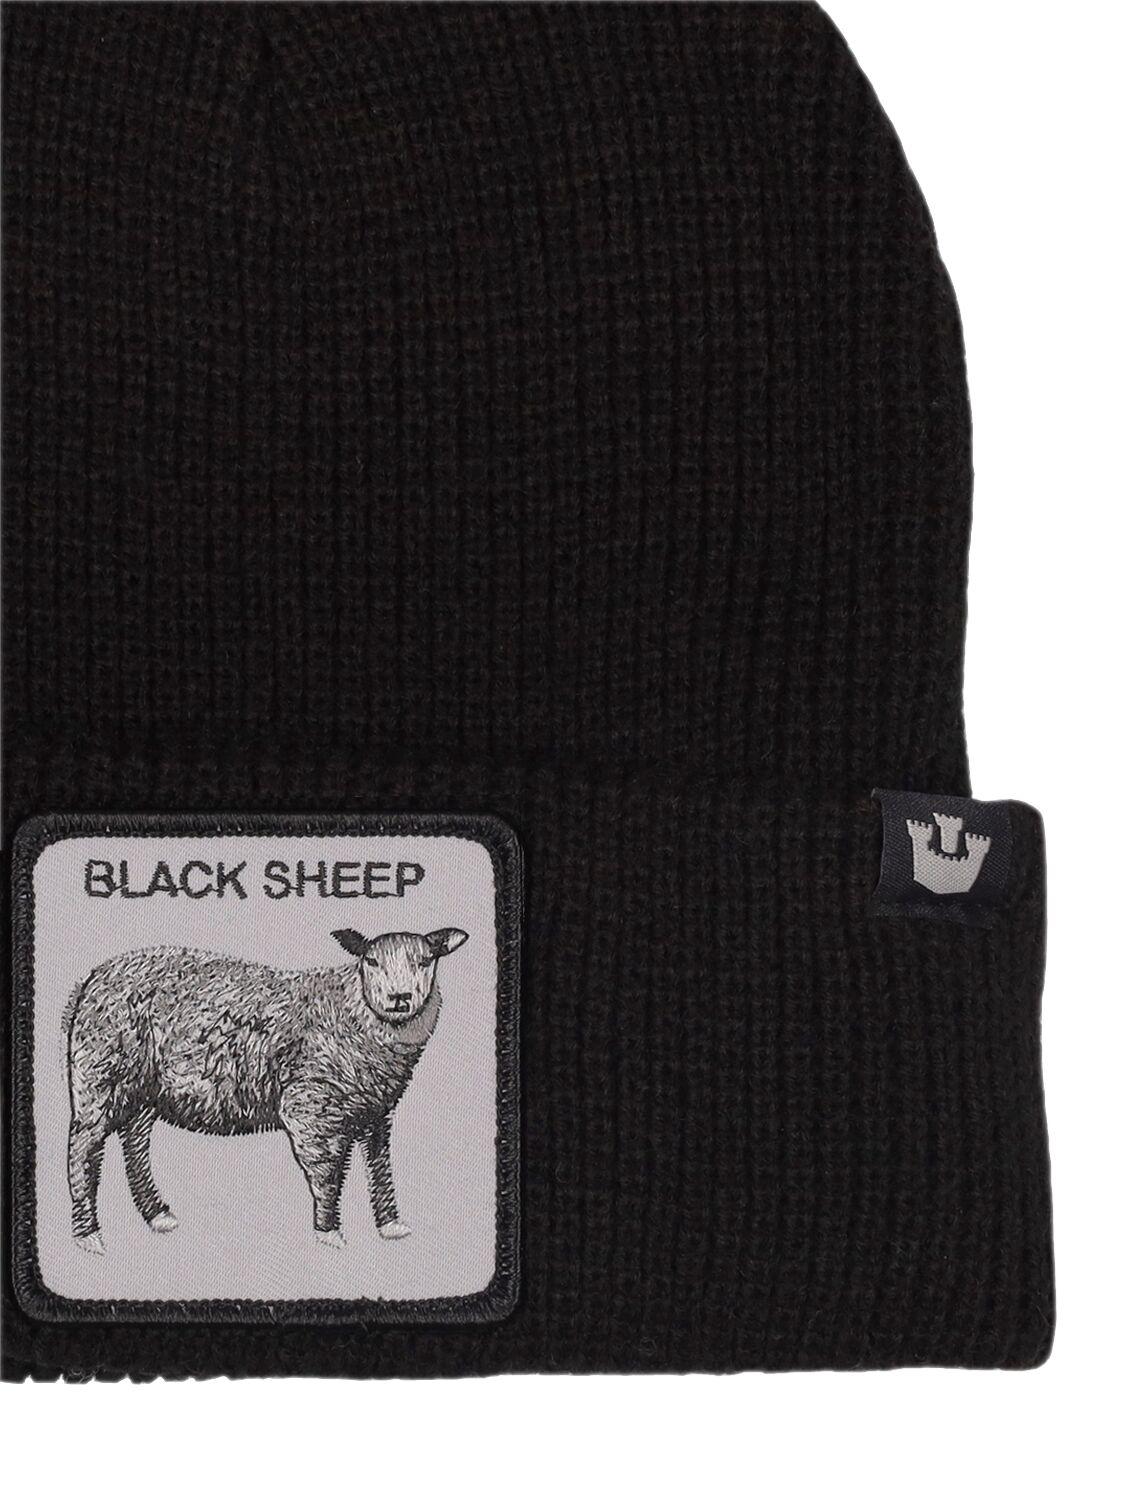 SHEEP THIS针织便帽